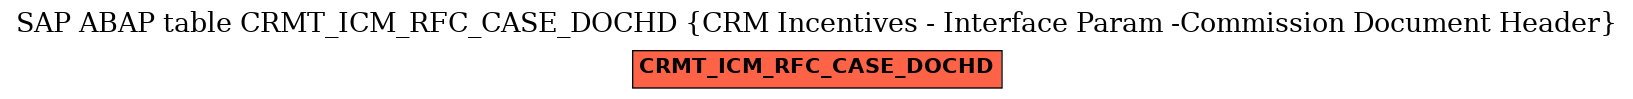 E-R Diagram for table CRMT_ICM_RFC_CASE_DOCHD (CRM Incentives - Interface Param -Commission Document Header)